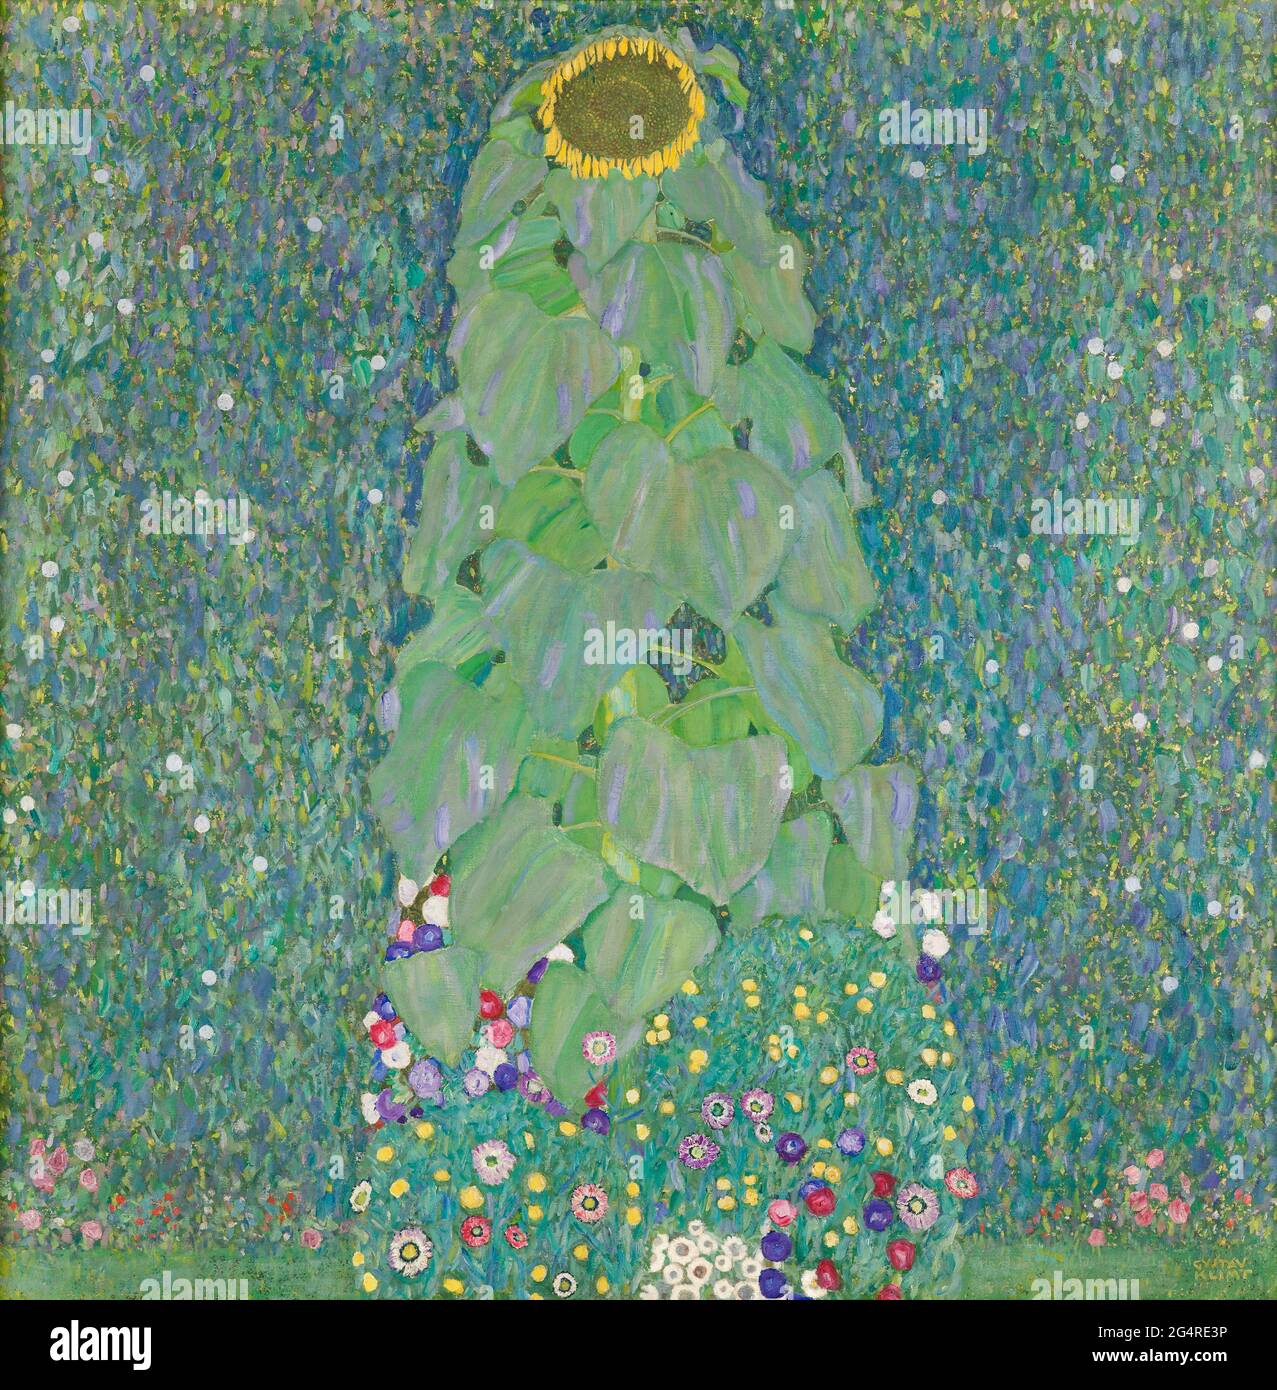 Gustav Klimt - le tournesol. Banque D'Images